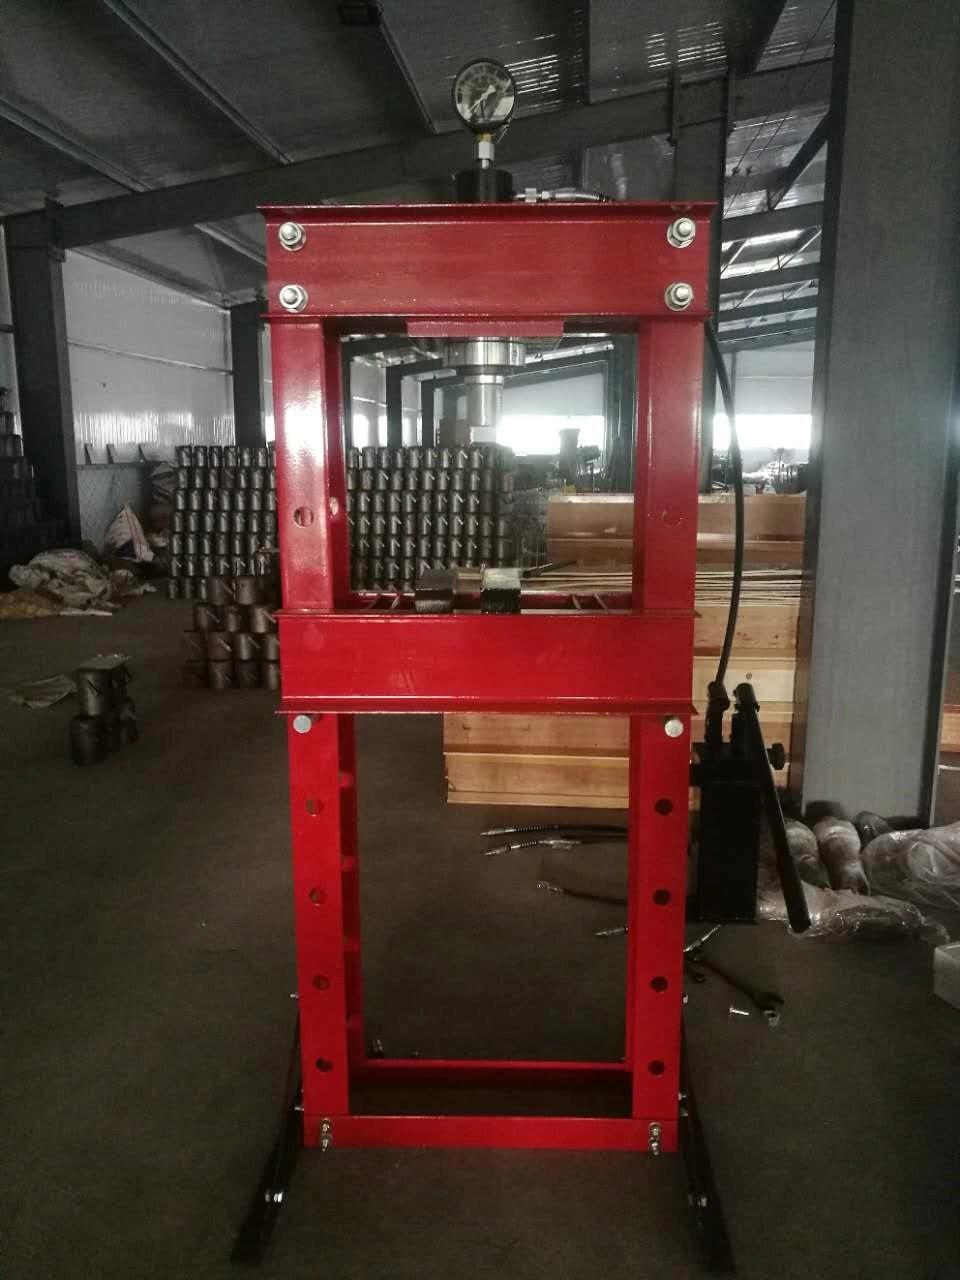 Heavy Duty 100 Ton Electric Press Machine Workshop Press Machine